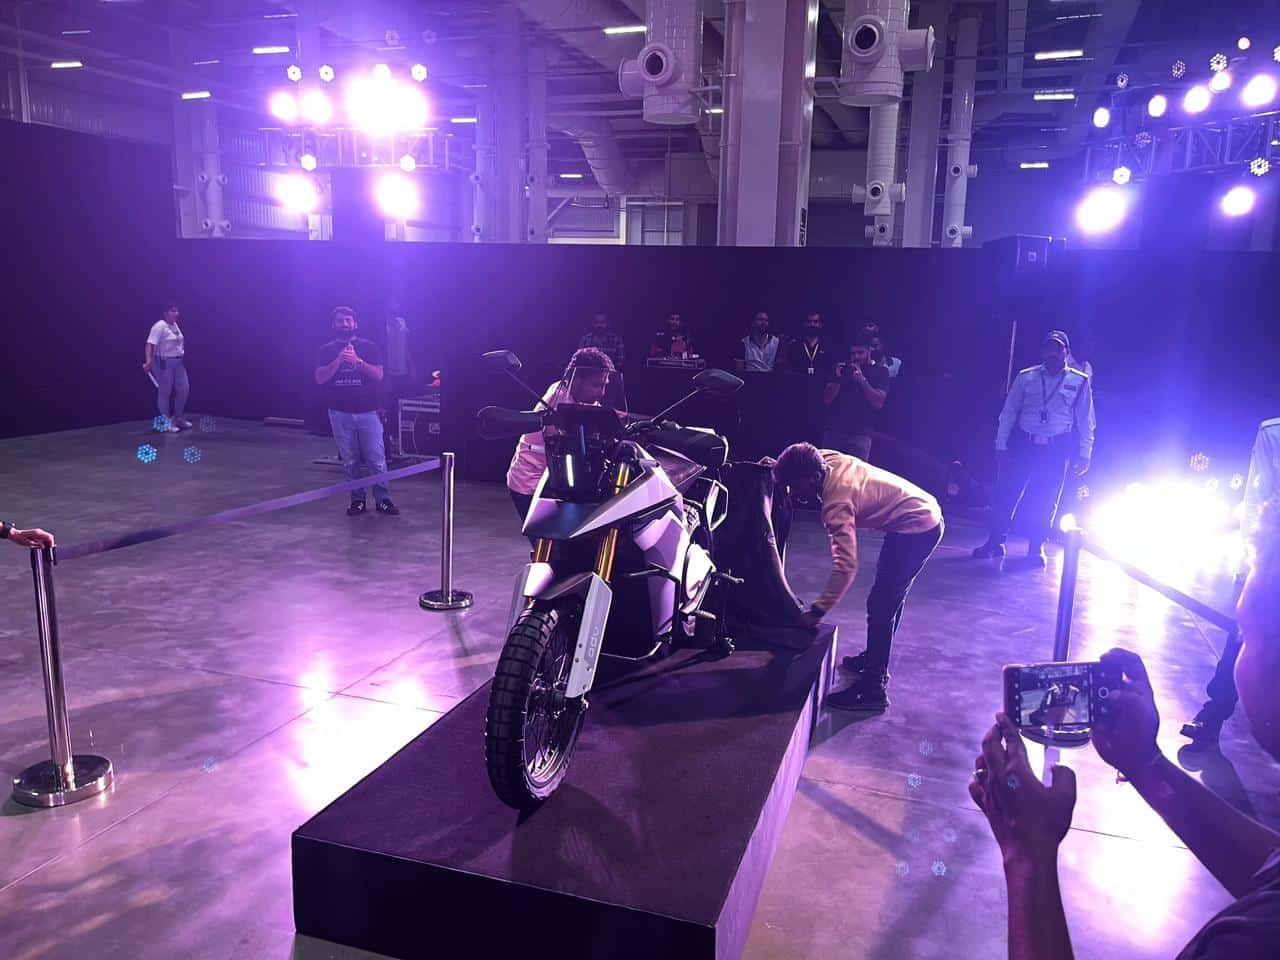 Future of electric bikes in India?